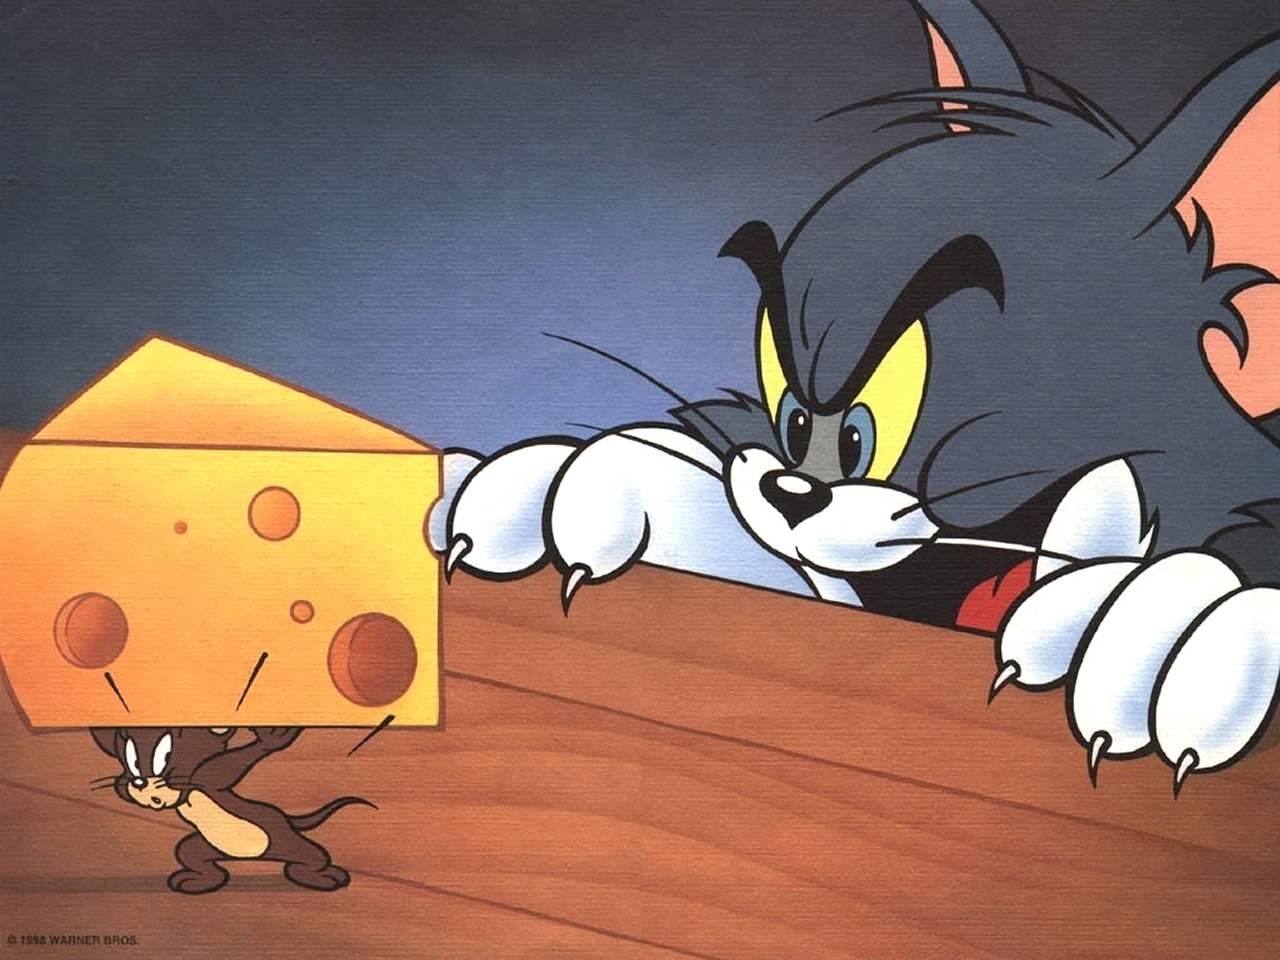 "Tom and Jerry" desktop wallpaper (1280 x 960 pixels)